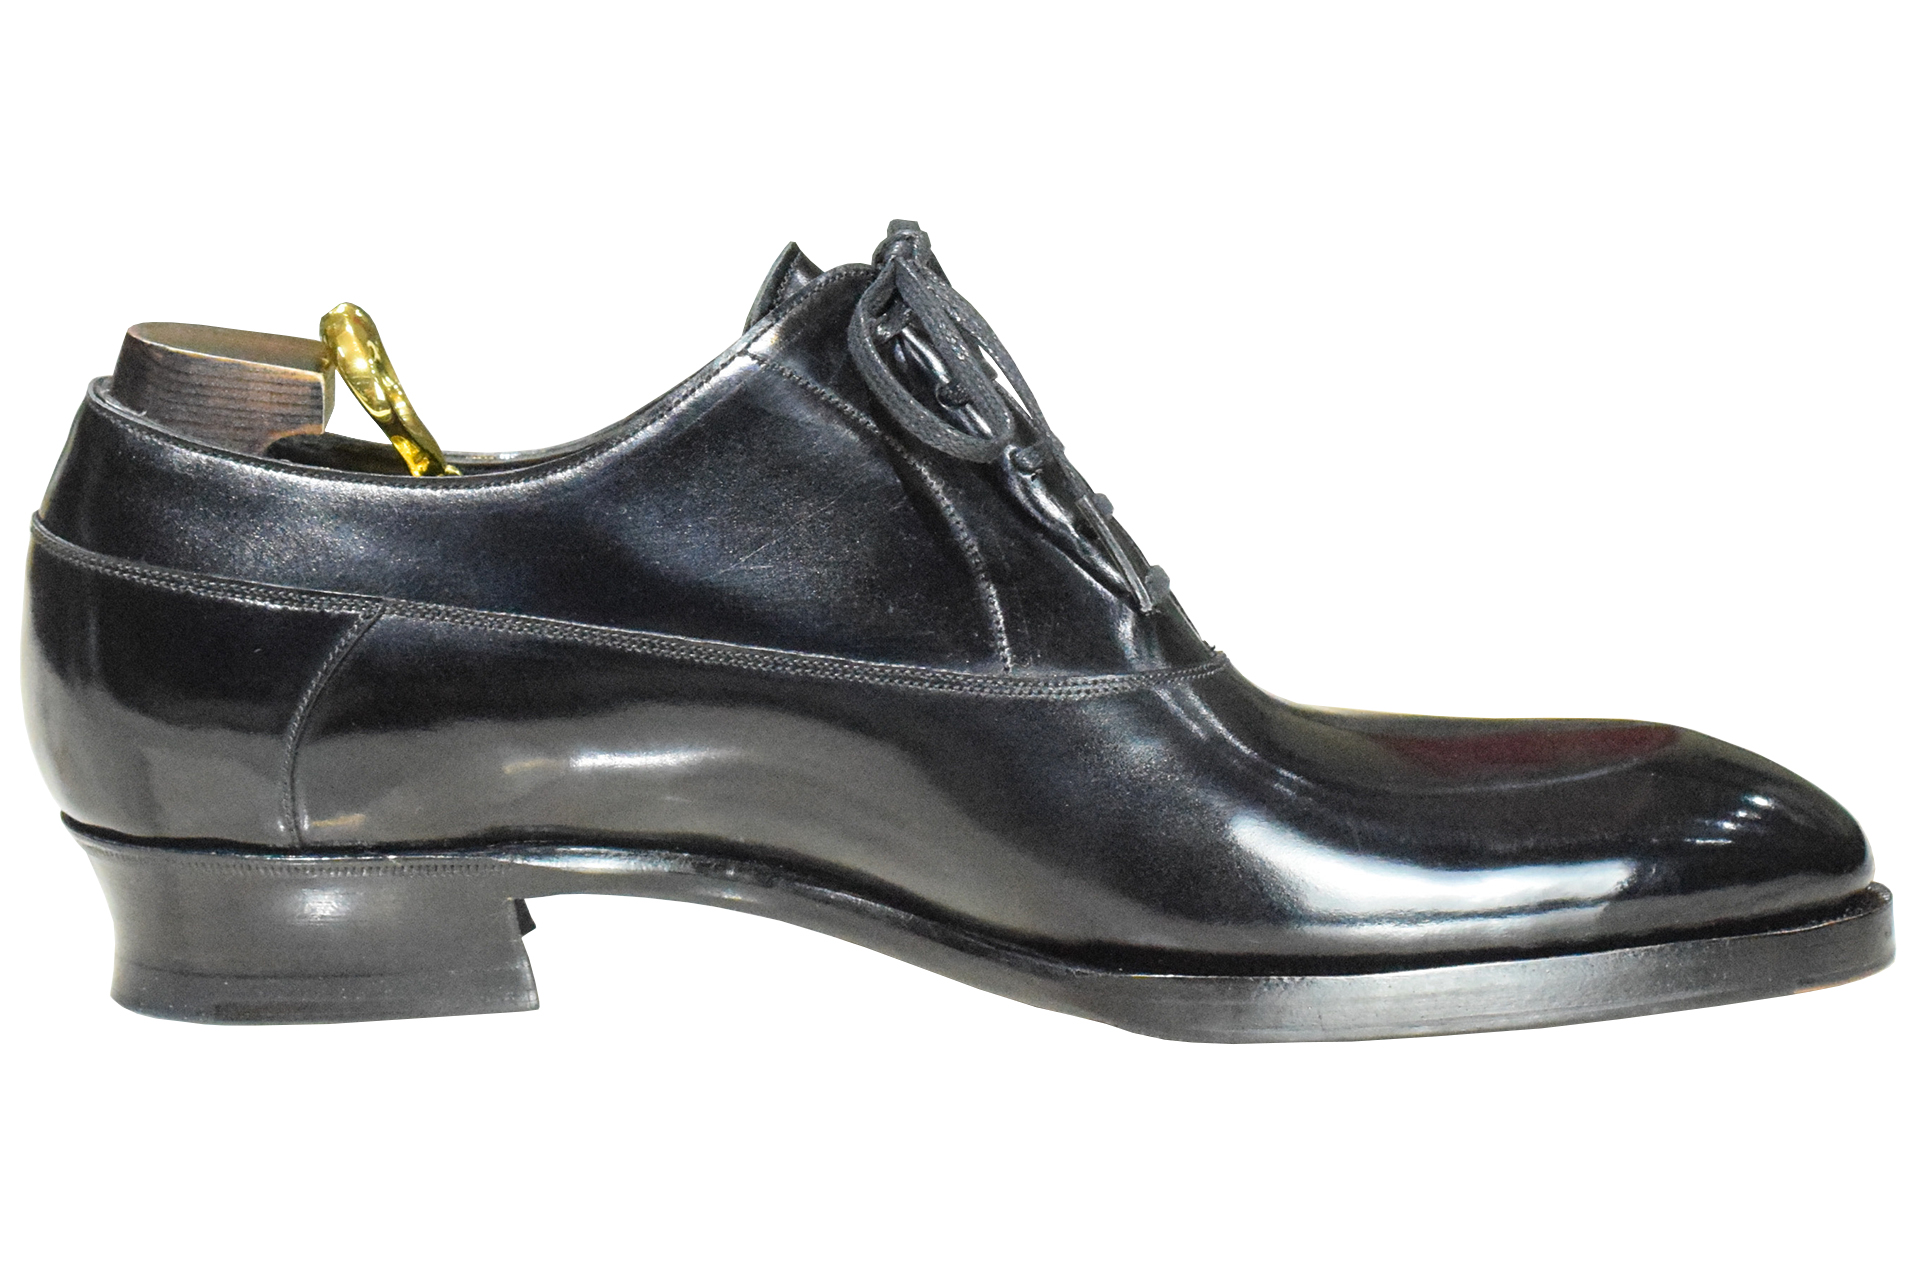 MTO Balmoral plain toe shoes - Shell cordovan leather